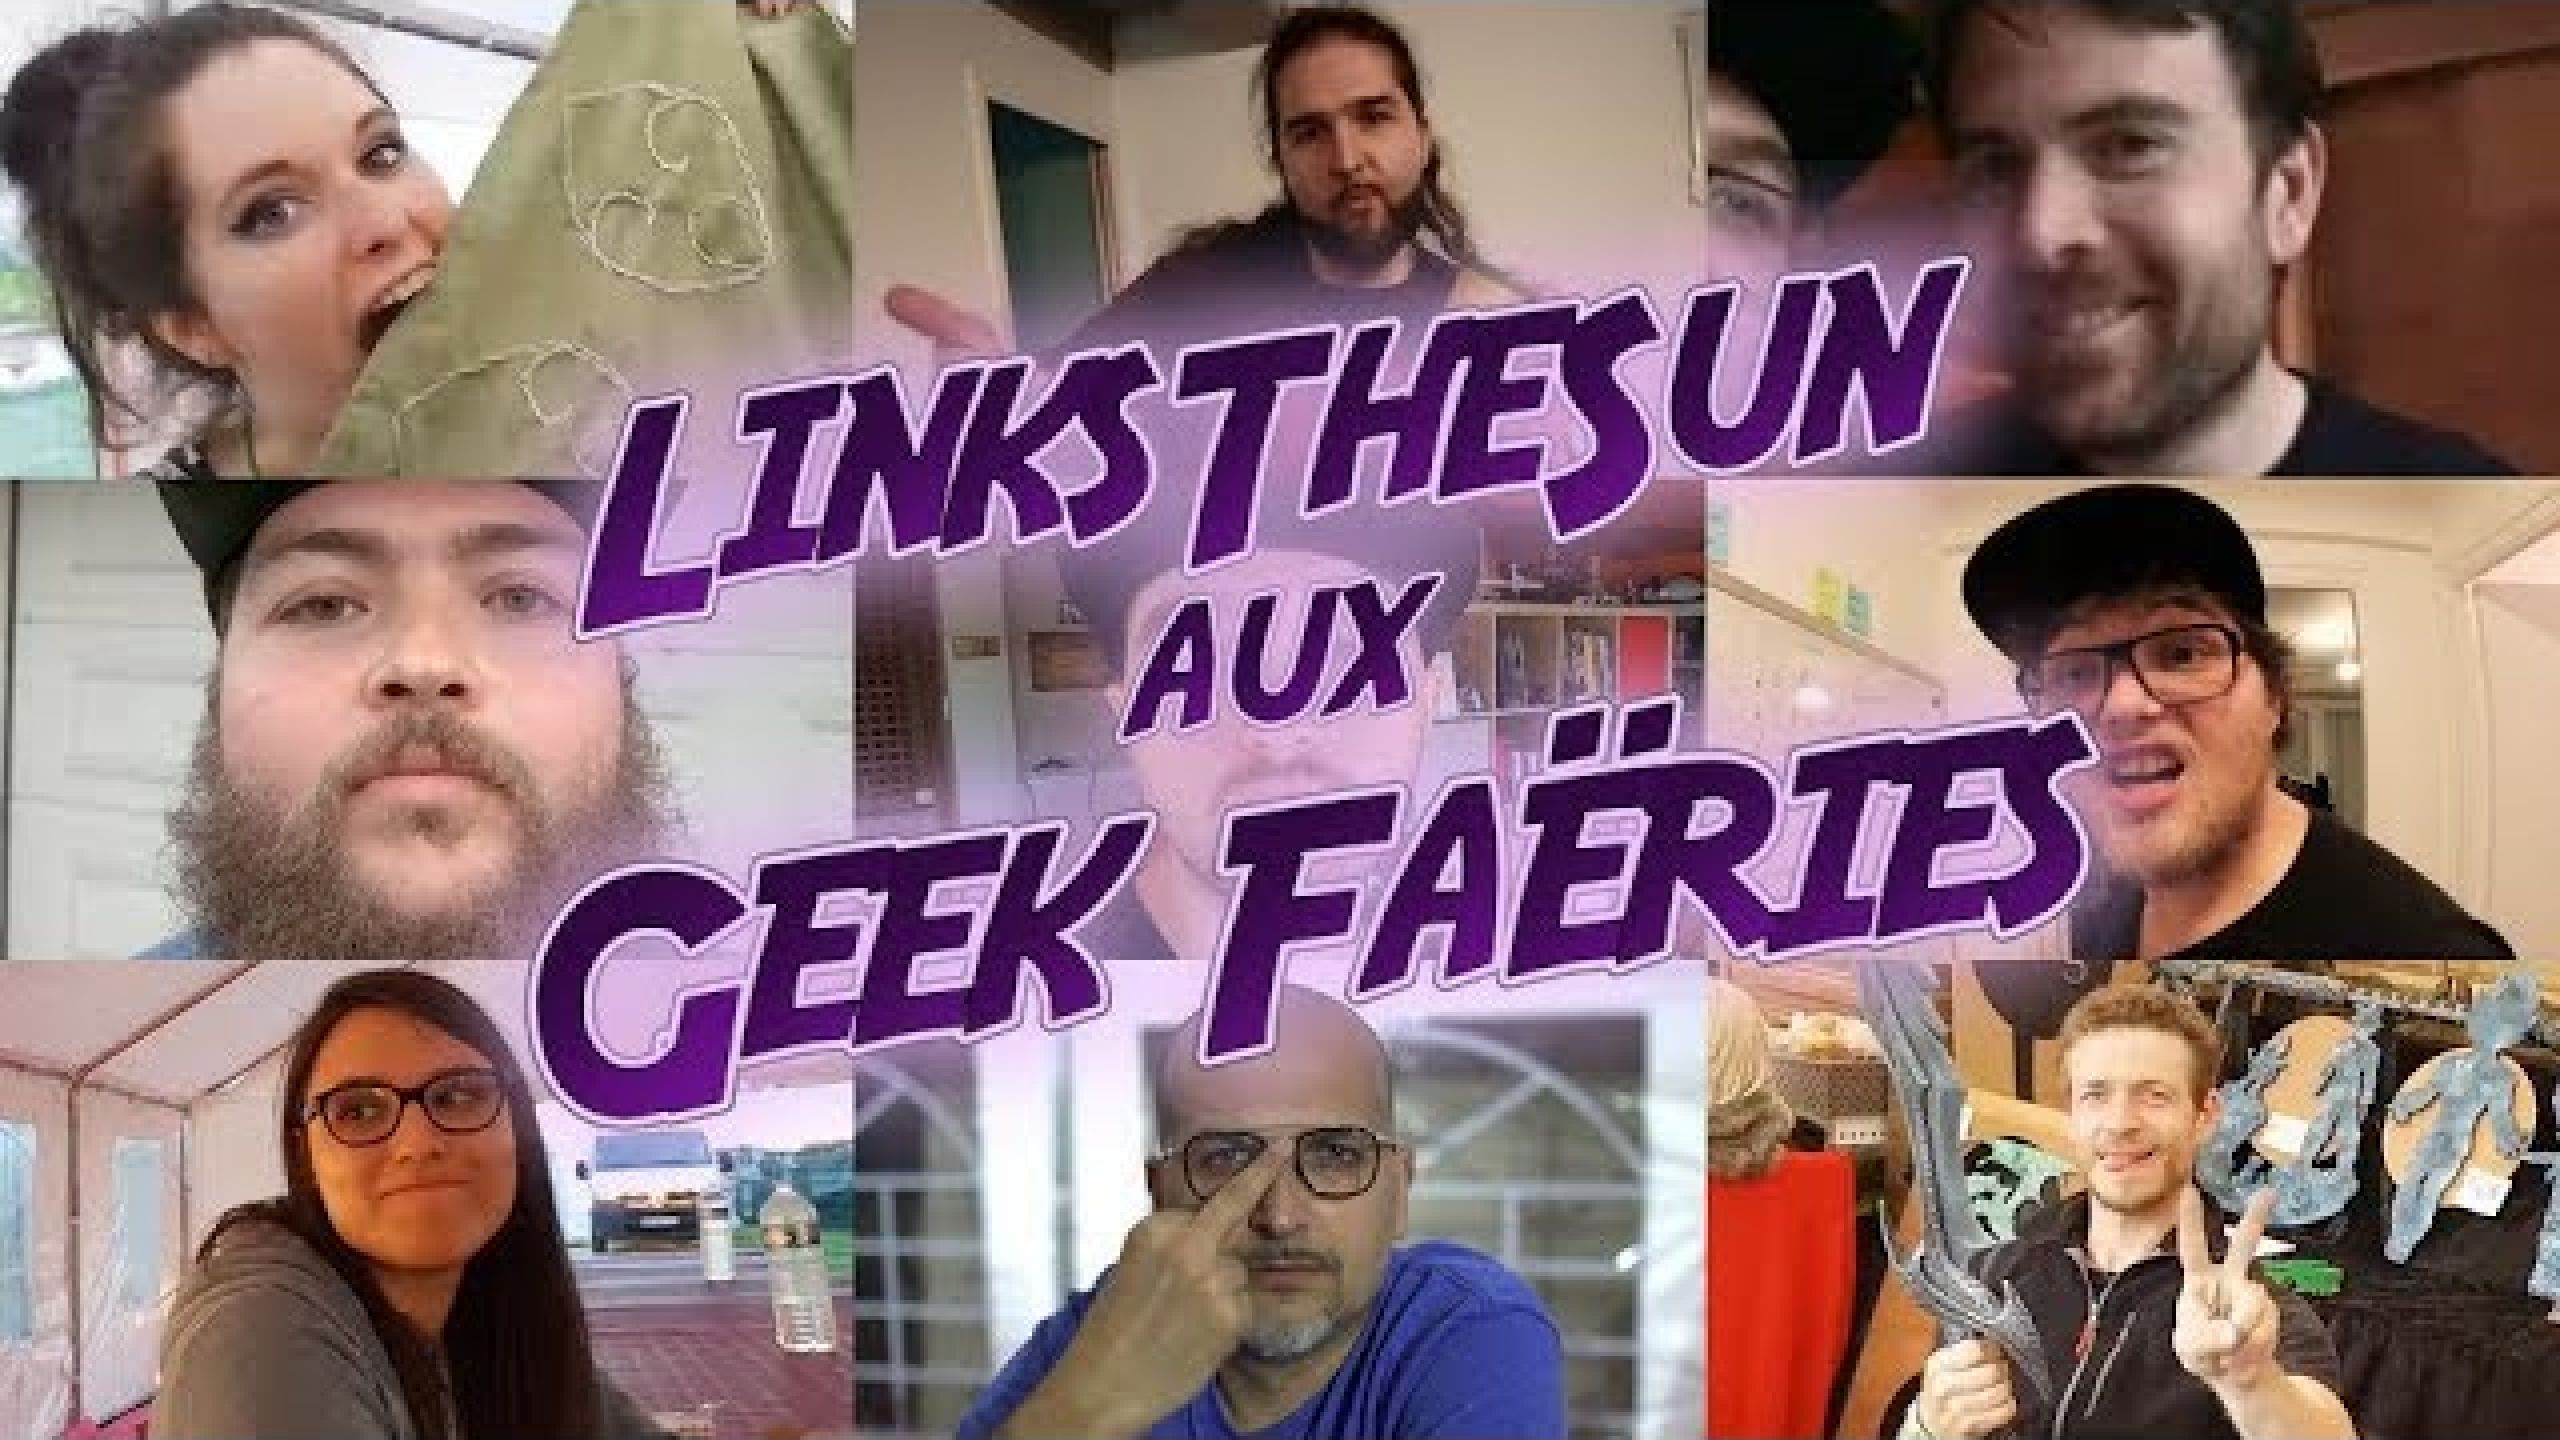 Vlog - LinksTheSun aux Geek Faëries 2018